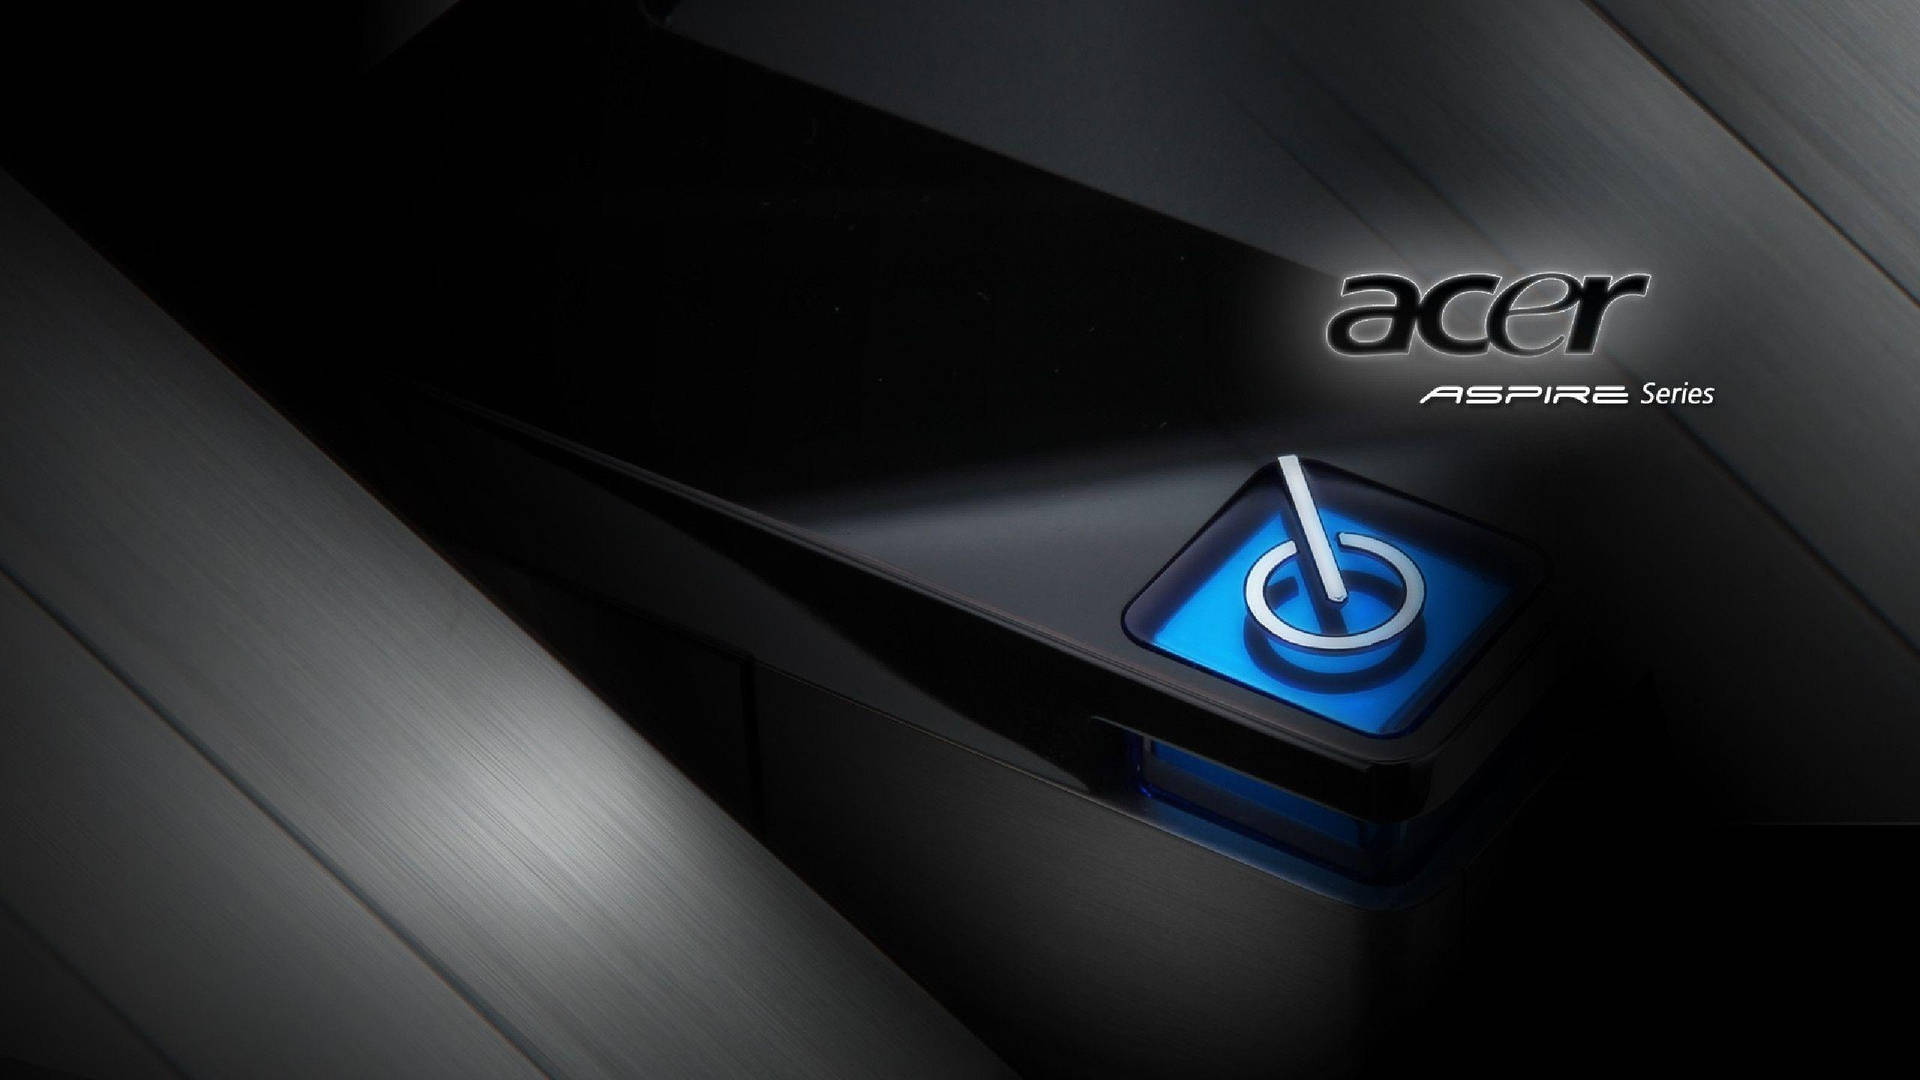 Black Acer Aspire Series Logo Background